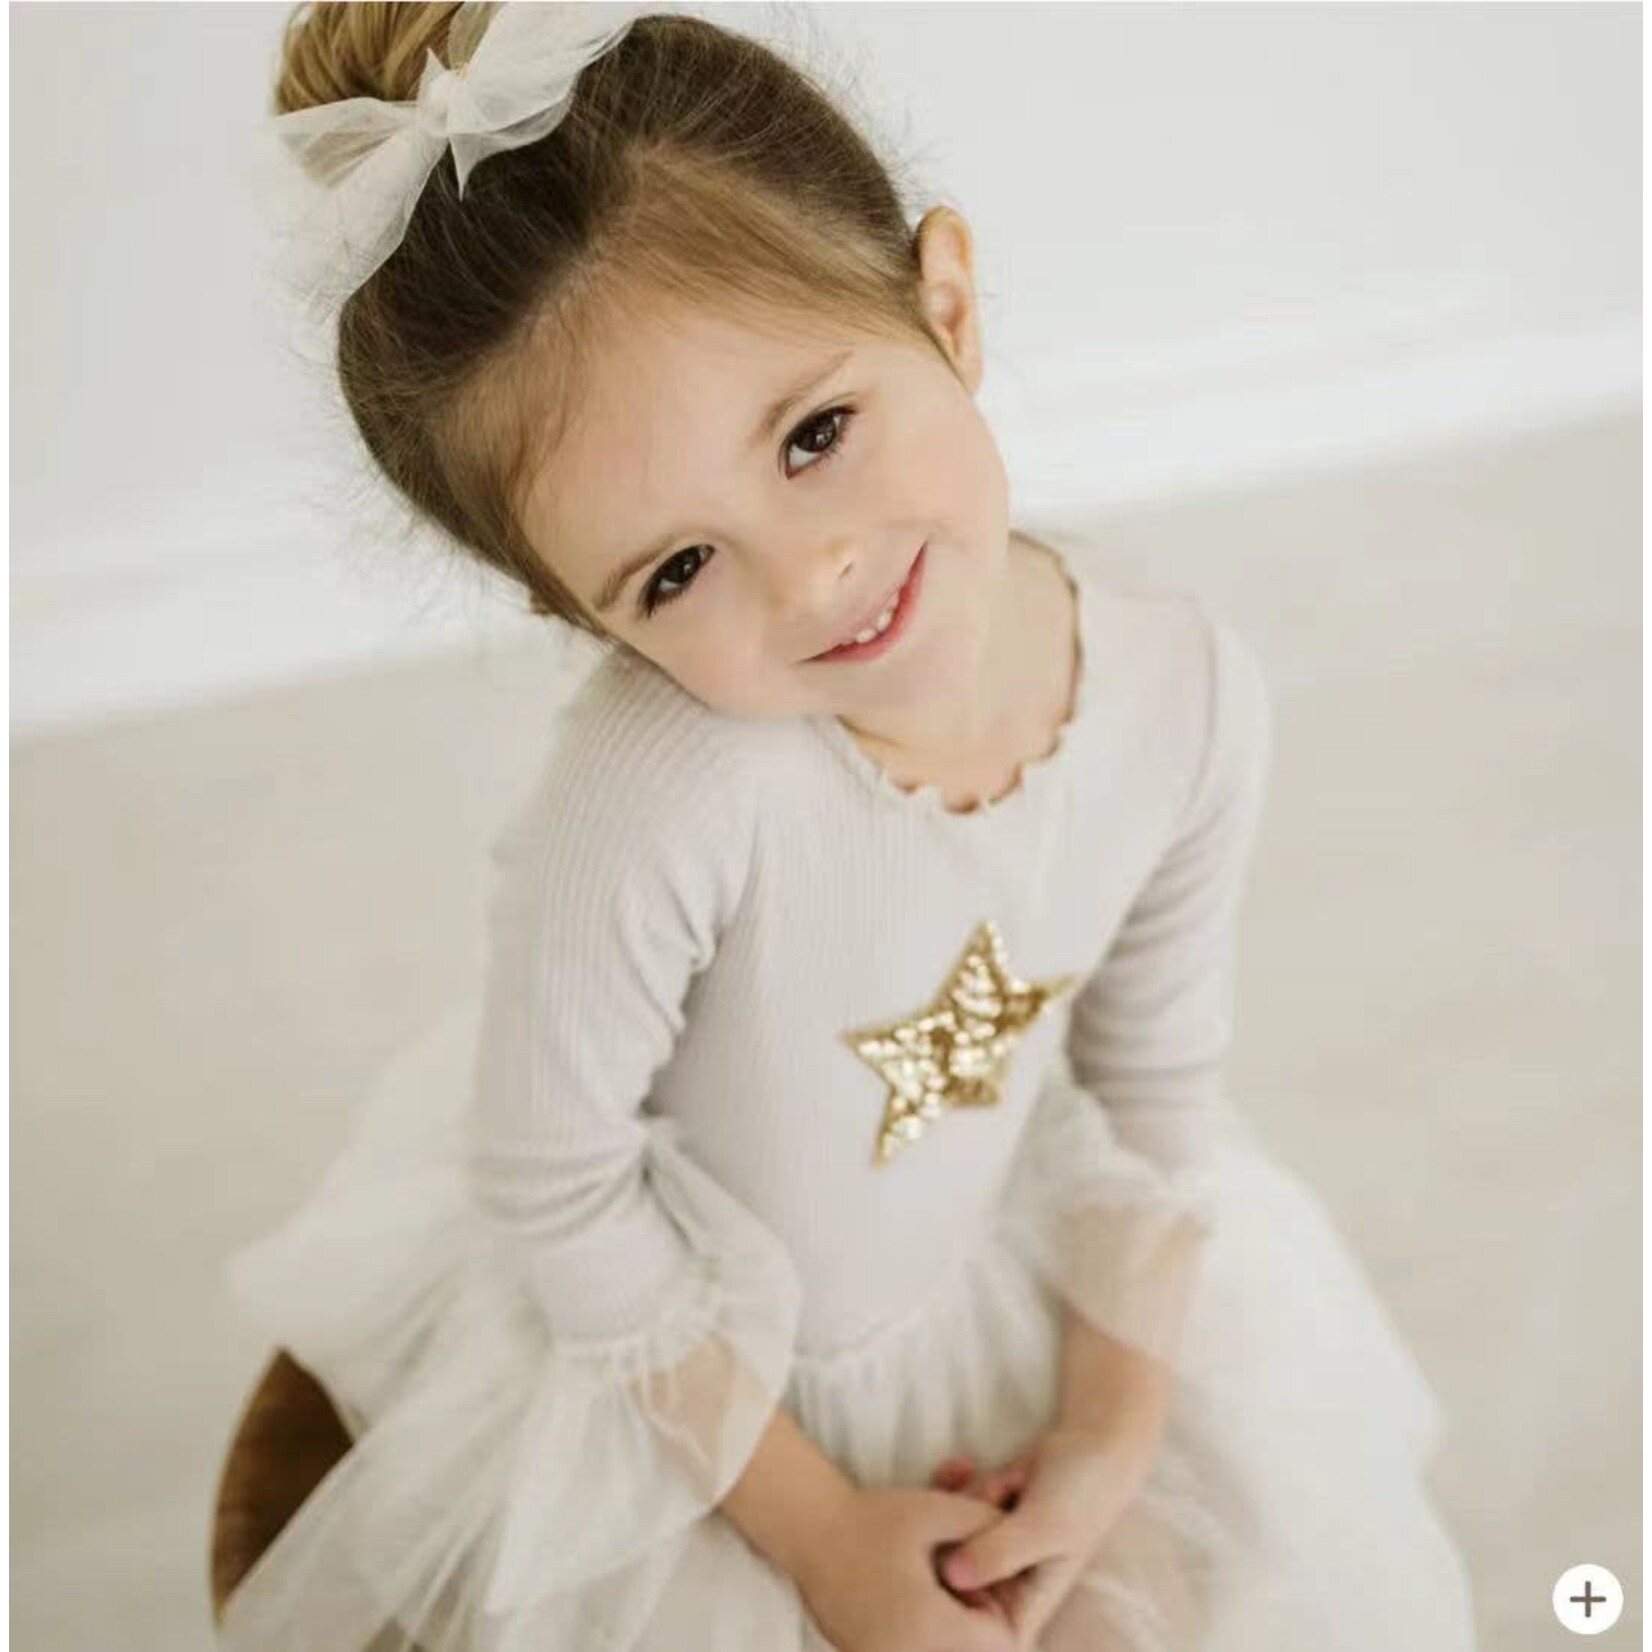 PETITE HAILEY Petite Hailey Star Sleeve Tutu Dress